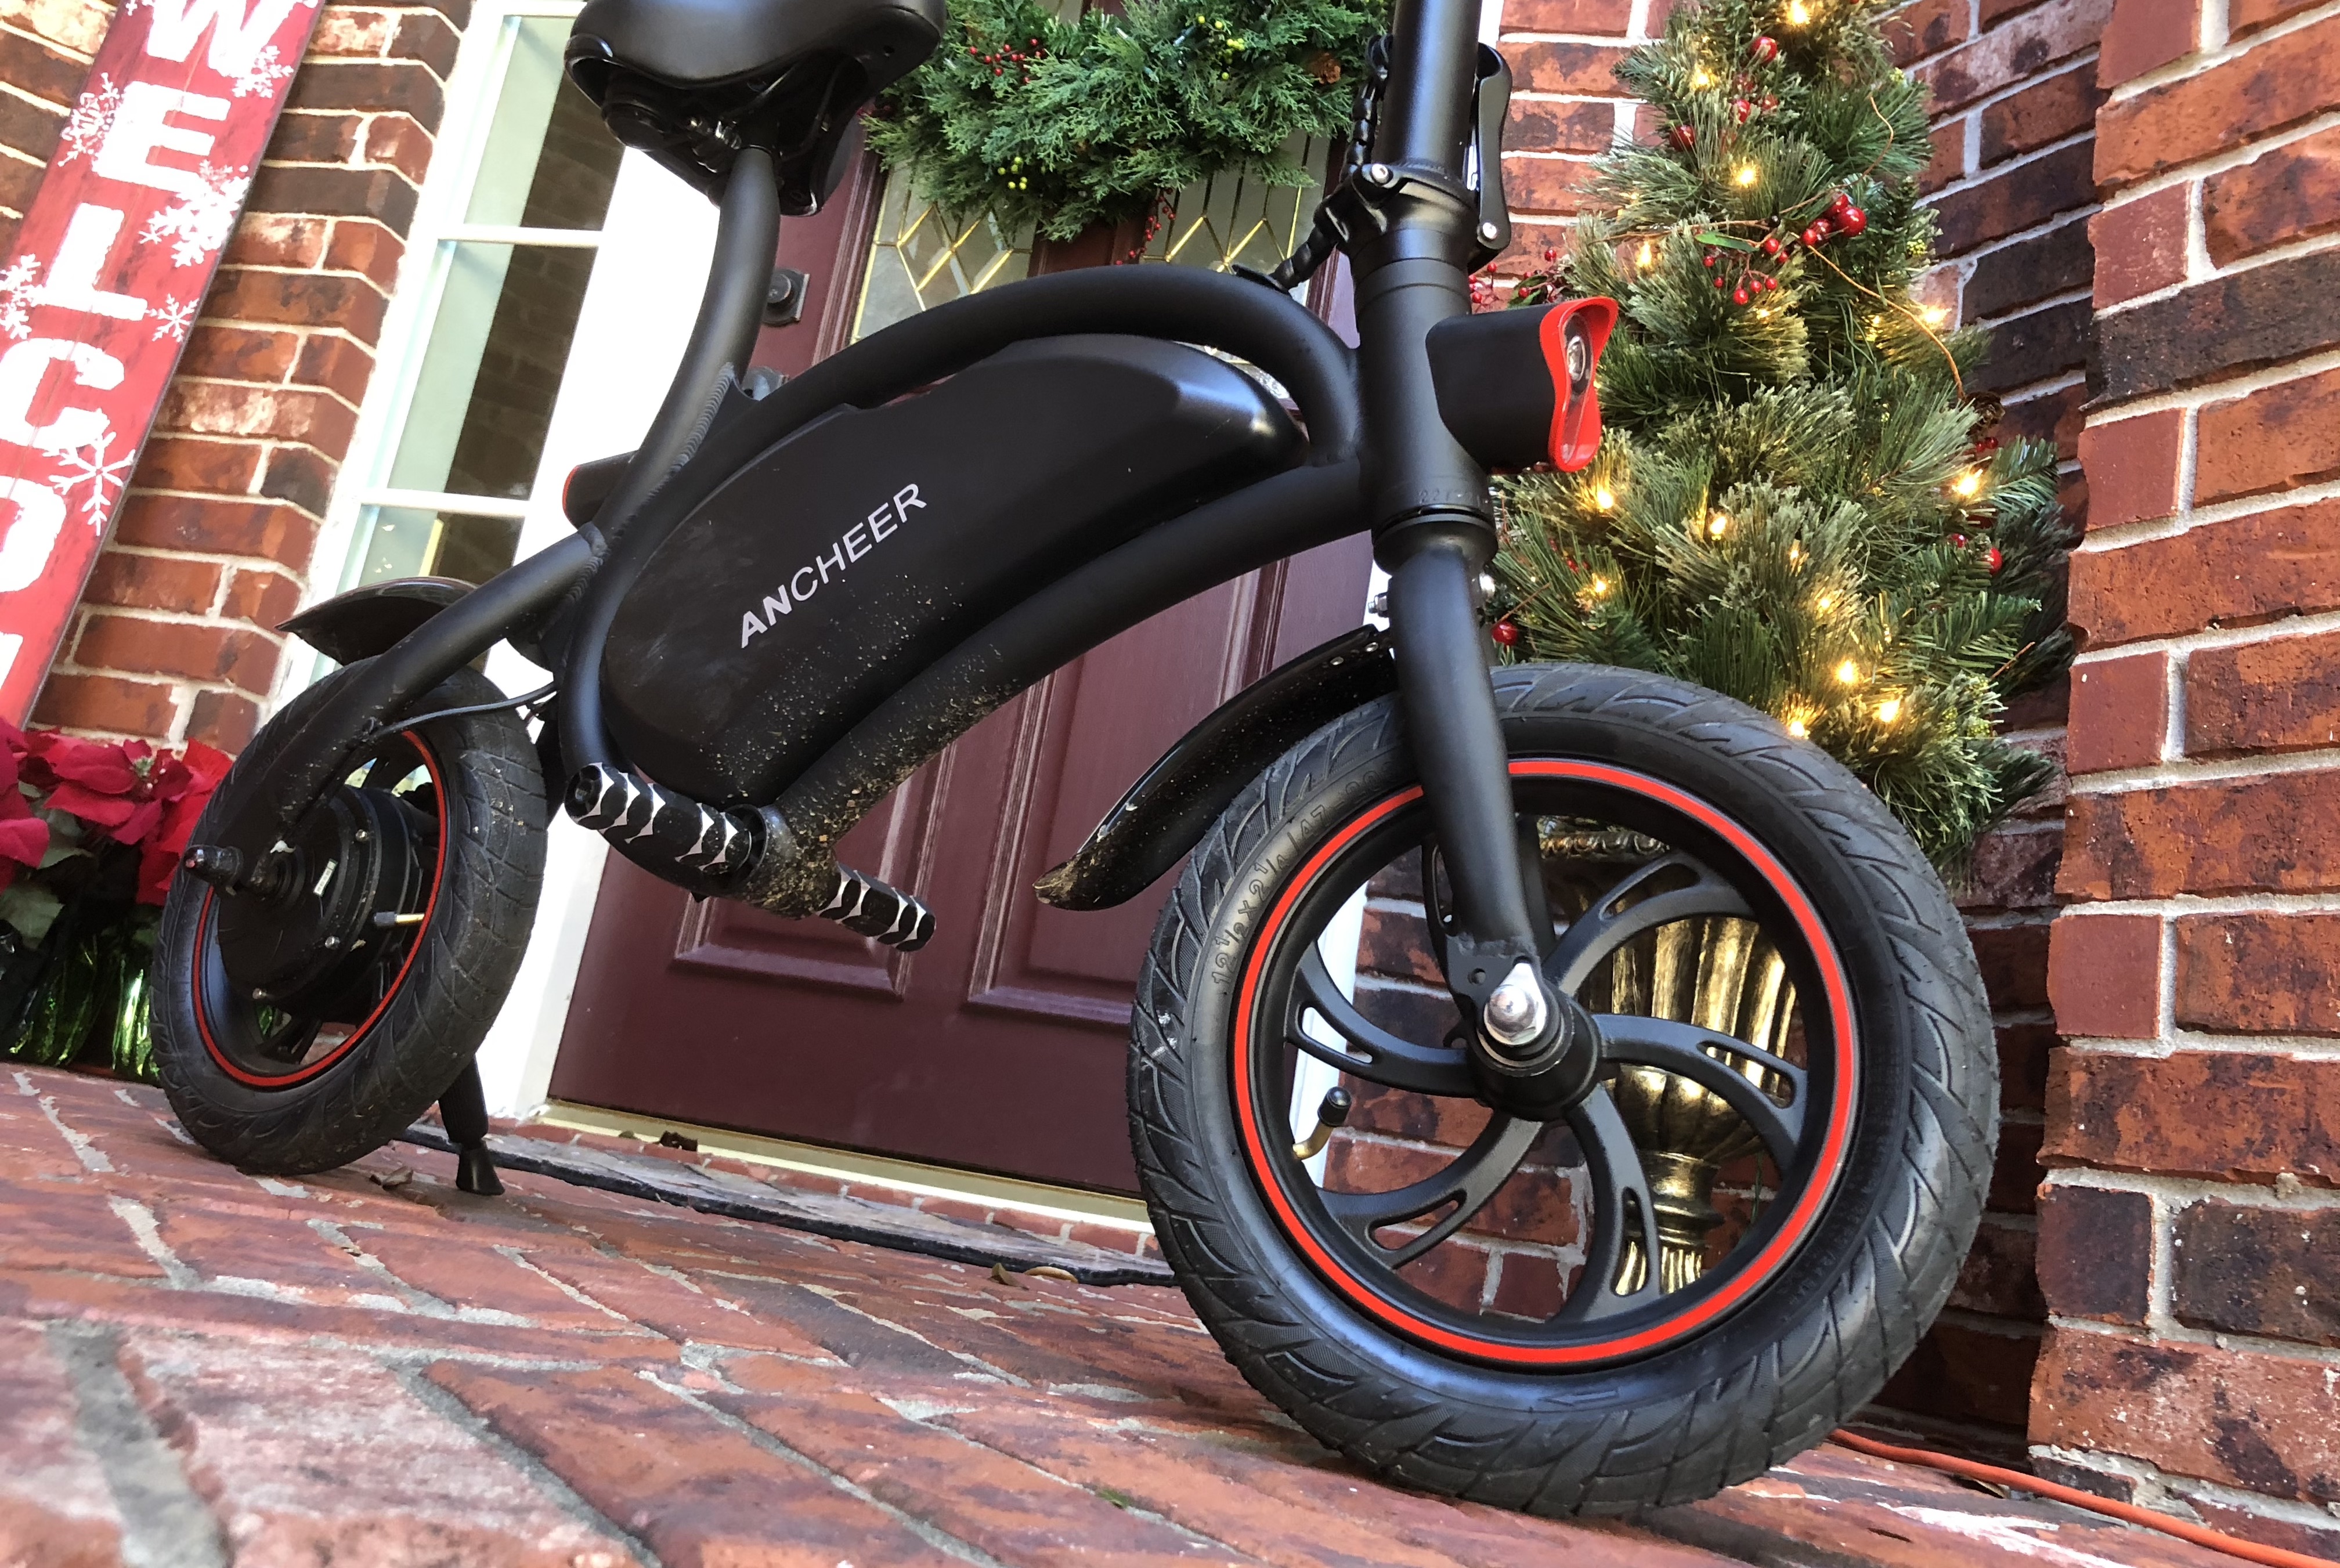 Electrek review: Ancheer folding e-bike/scooter makes a decent commuter ride for under $400